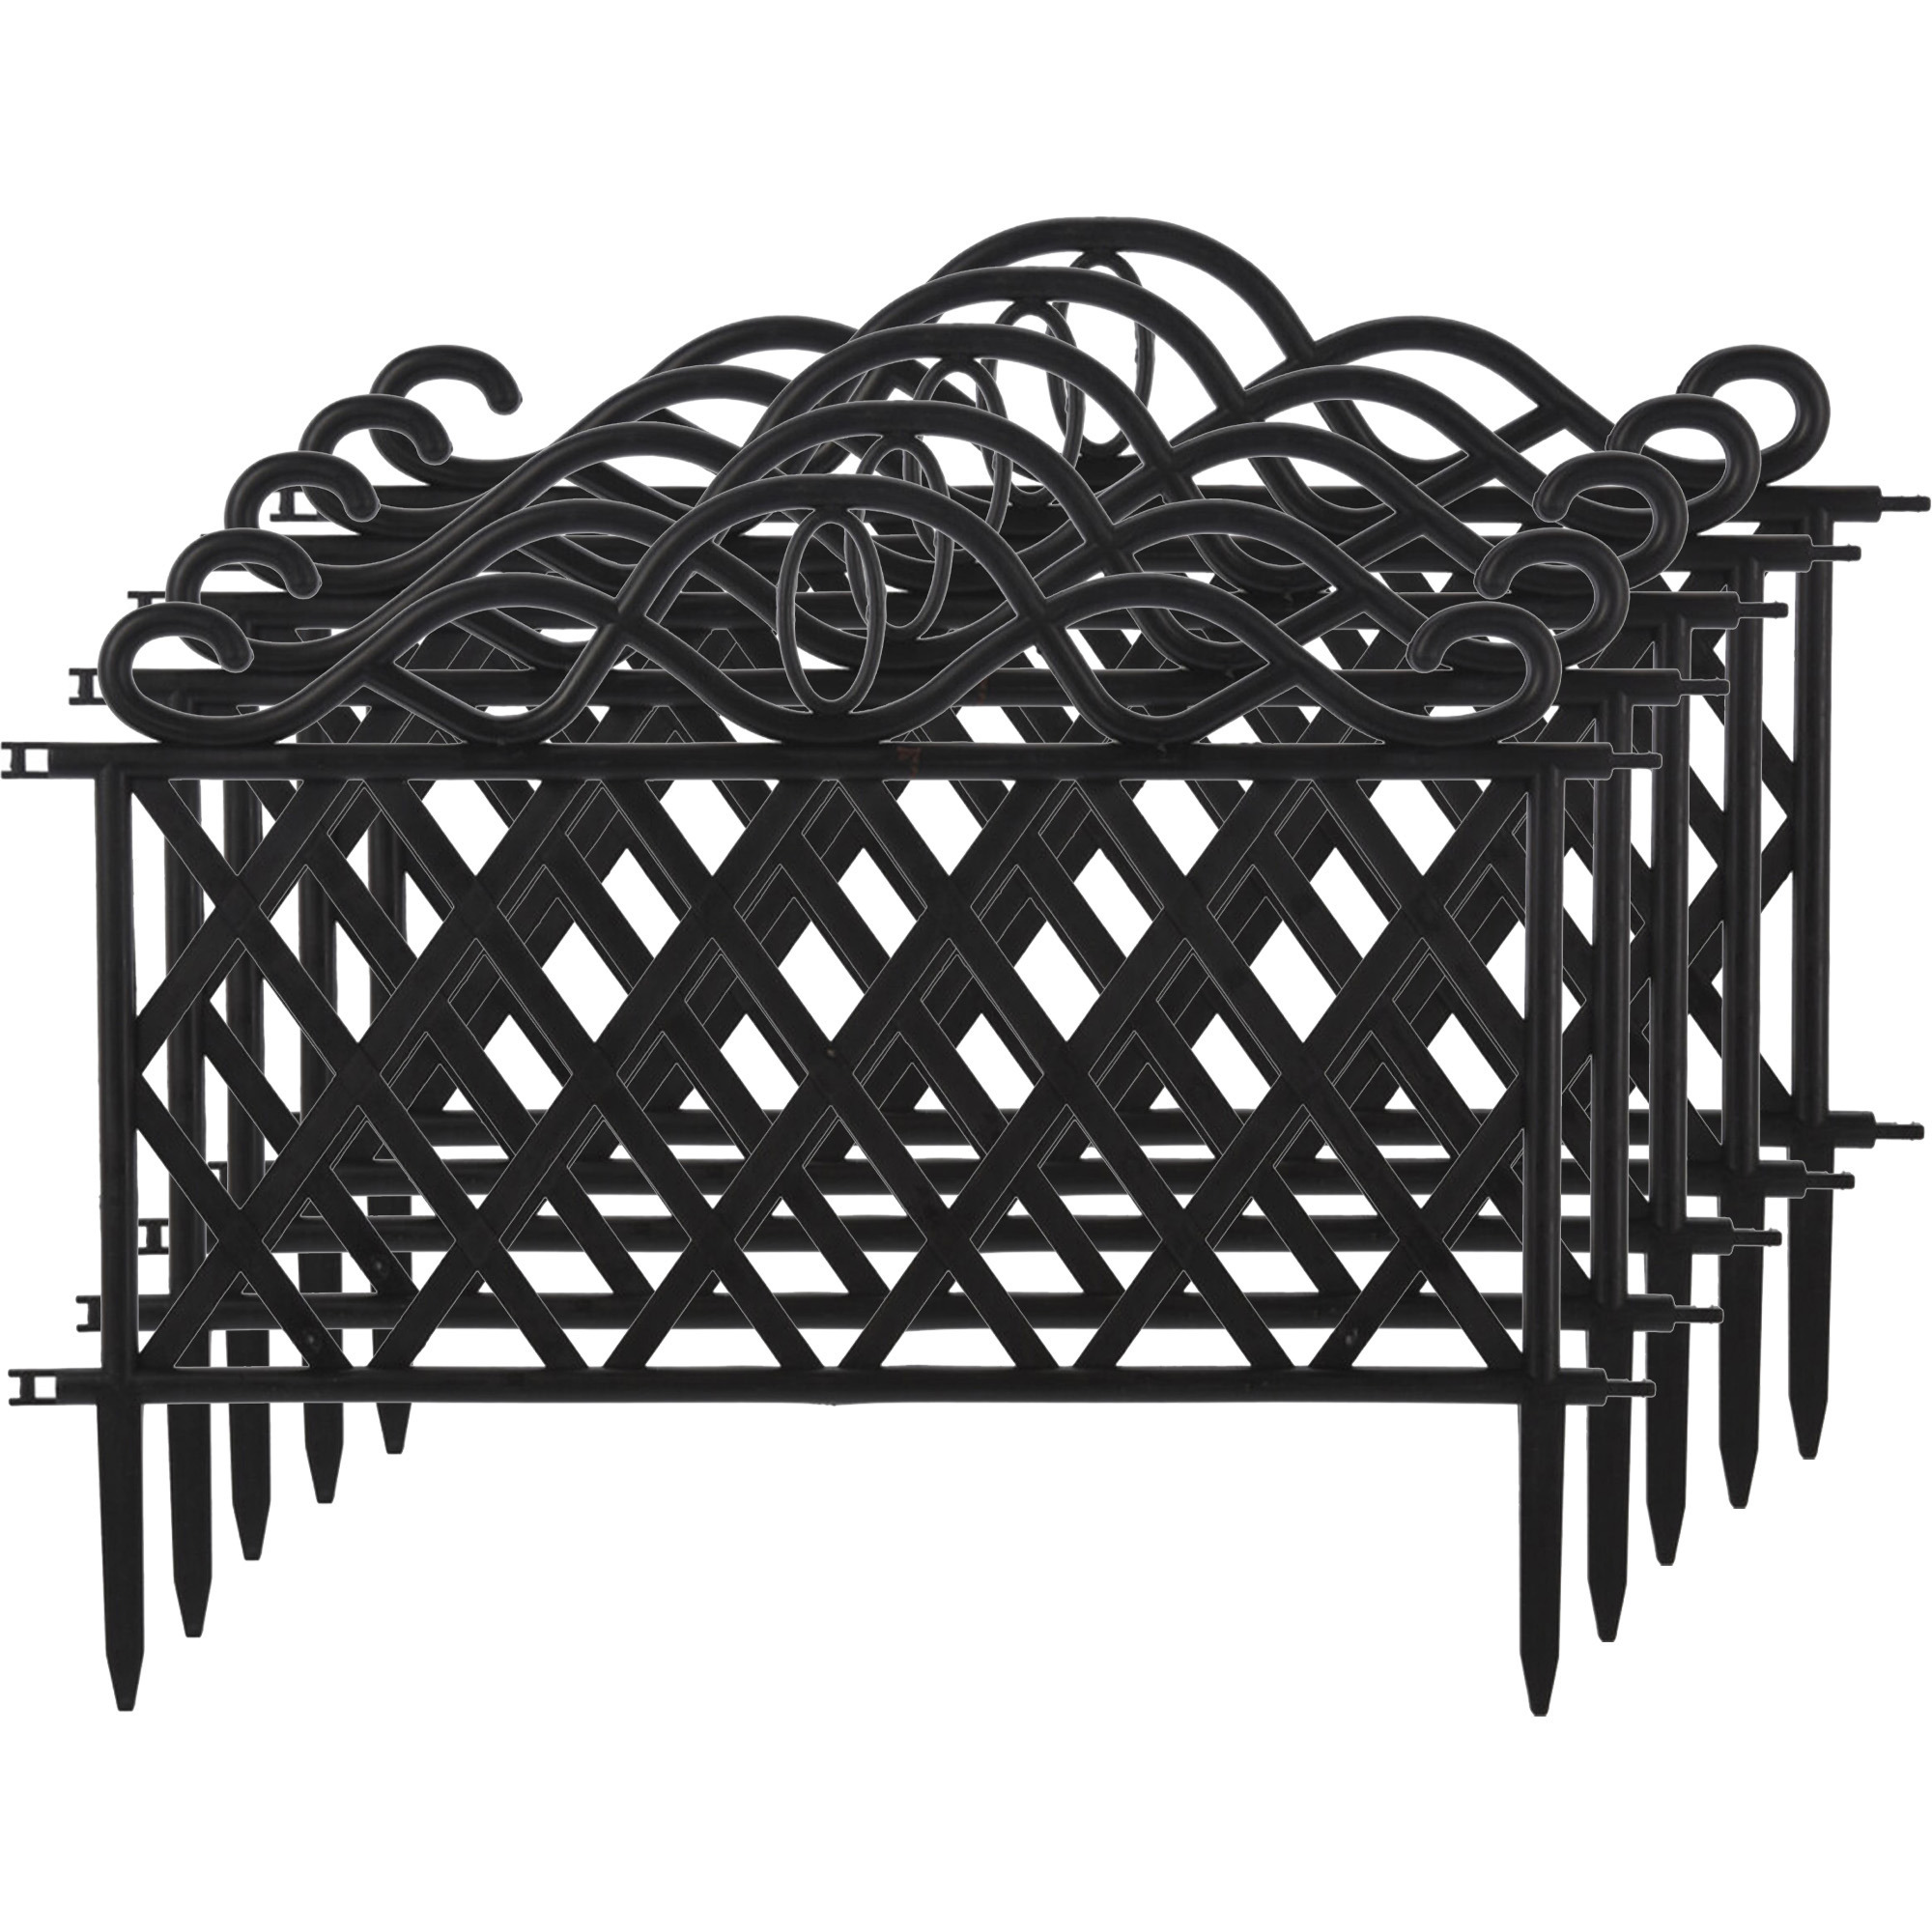 Tuinhekjes 20x stuks kunststof 48 x 34 cm zwart borderrand tuinafscheiding